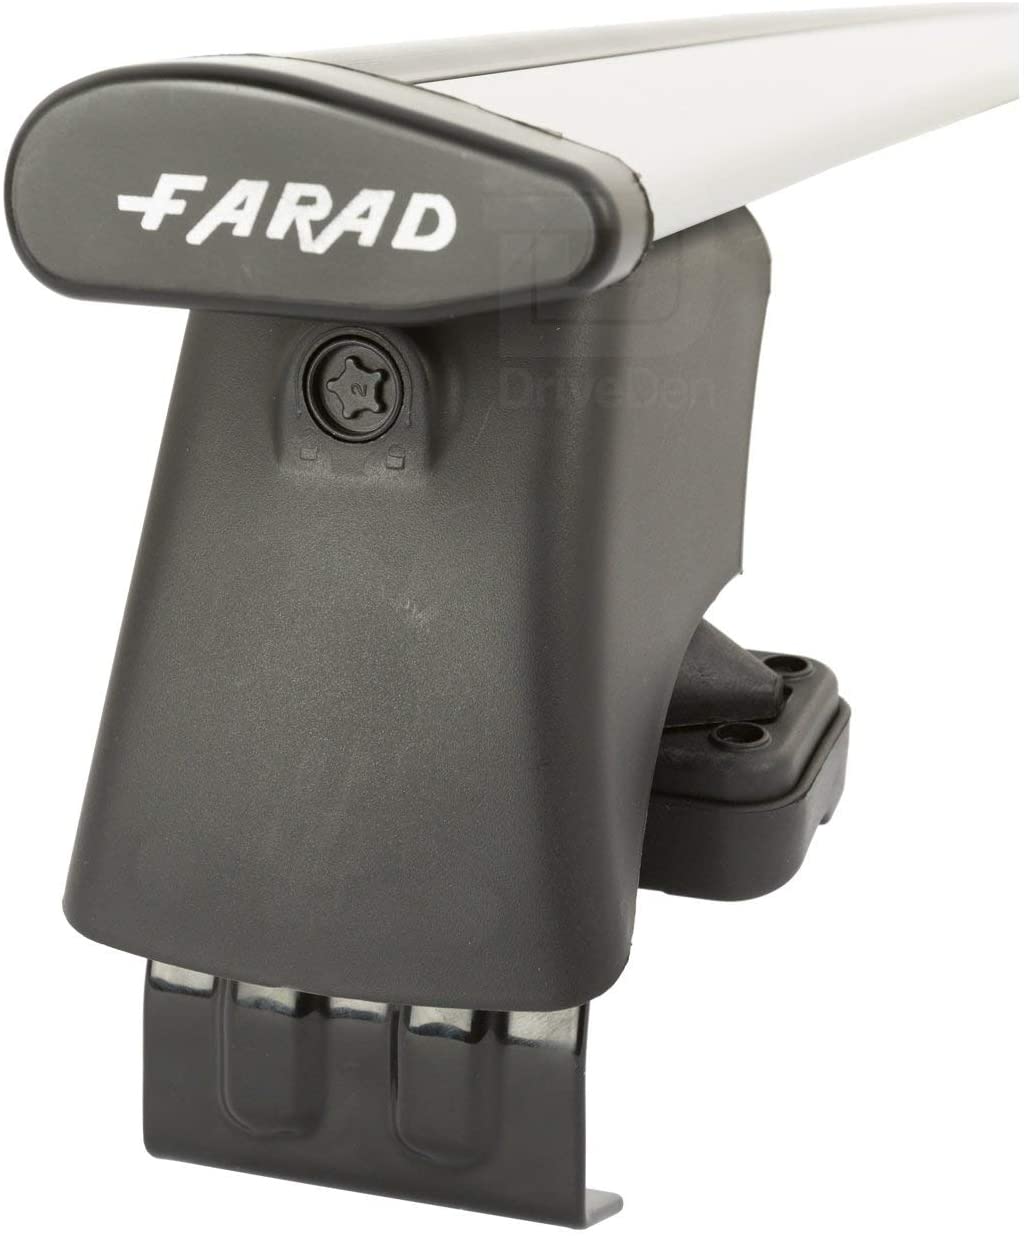 FARAD-Kit H2 per barre portatutto - Volkswagen Passat 2011-2015 (senza corrimano)